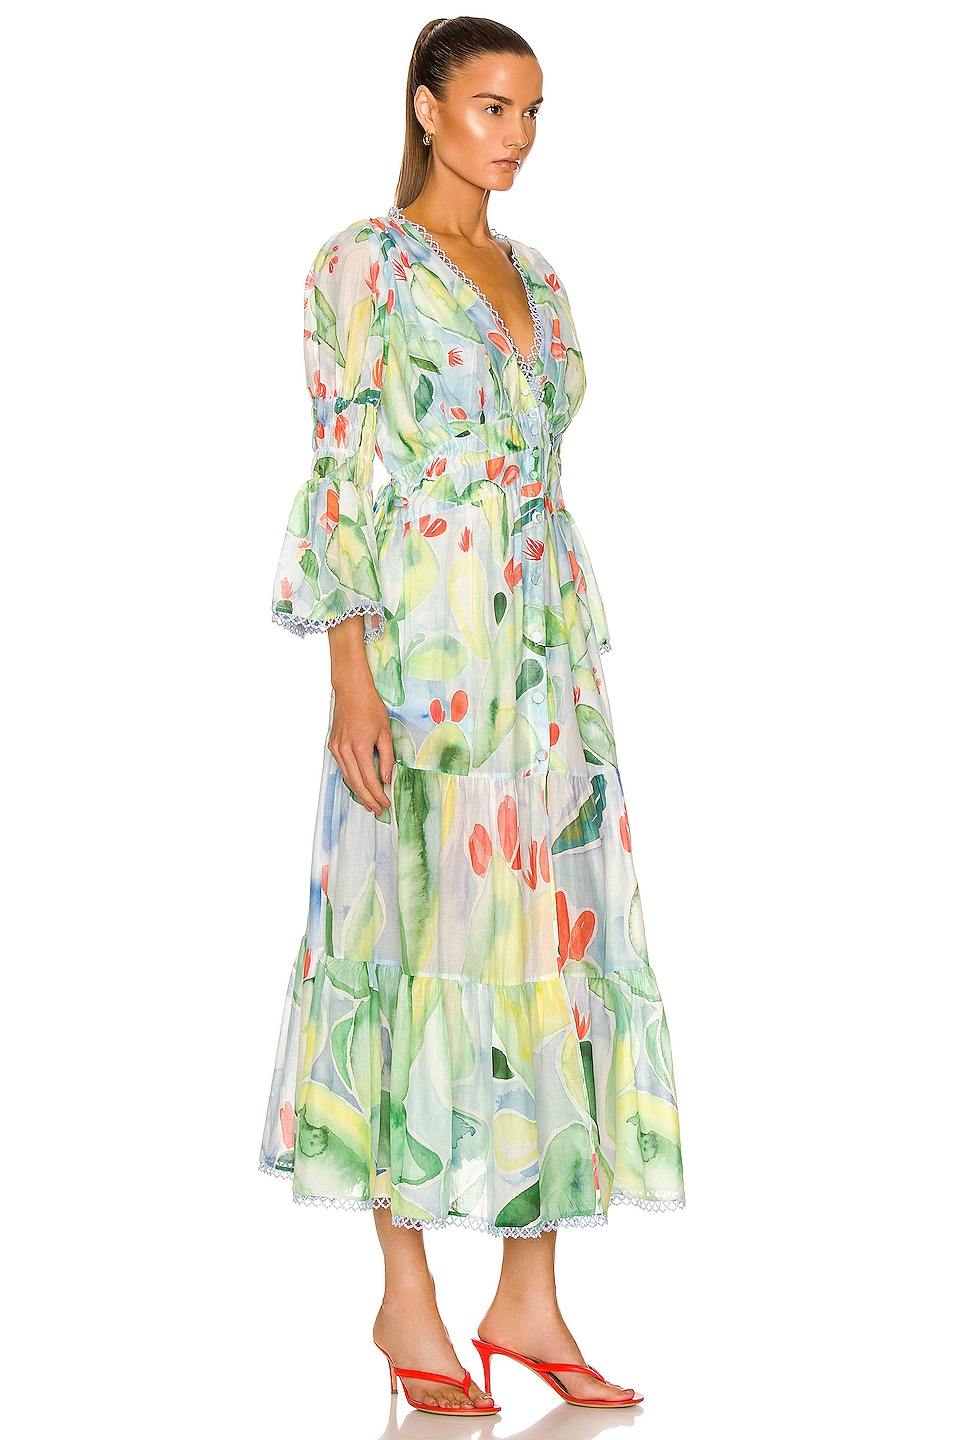 Charo Ruiz Ibiza Odette Maxi Dress in Barbary Print | FWRD